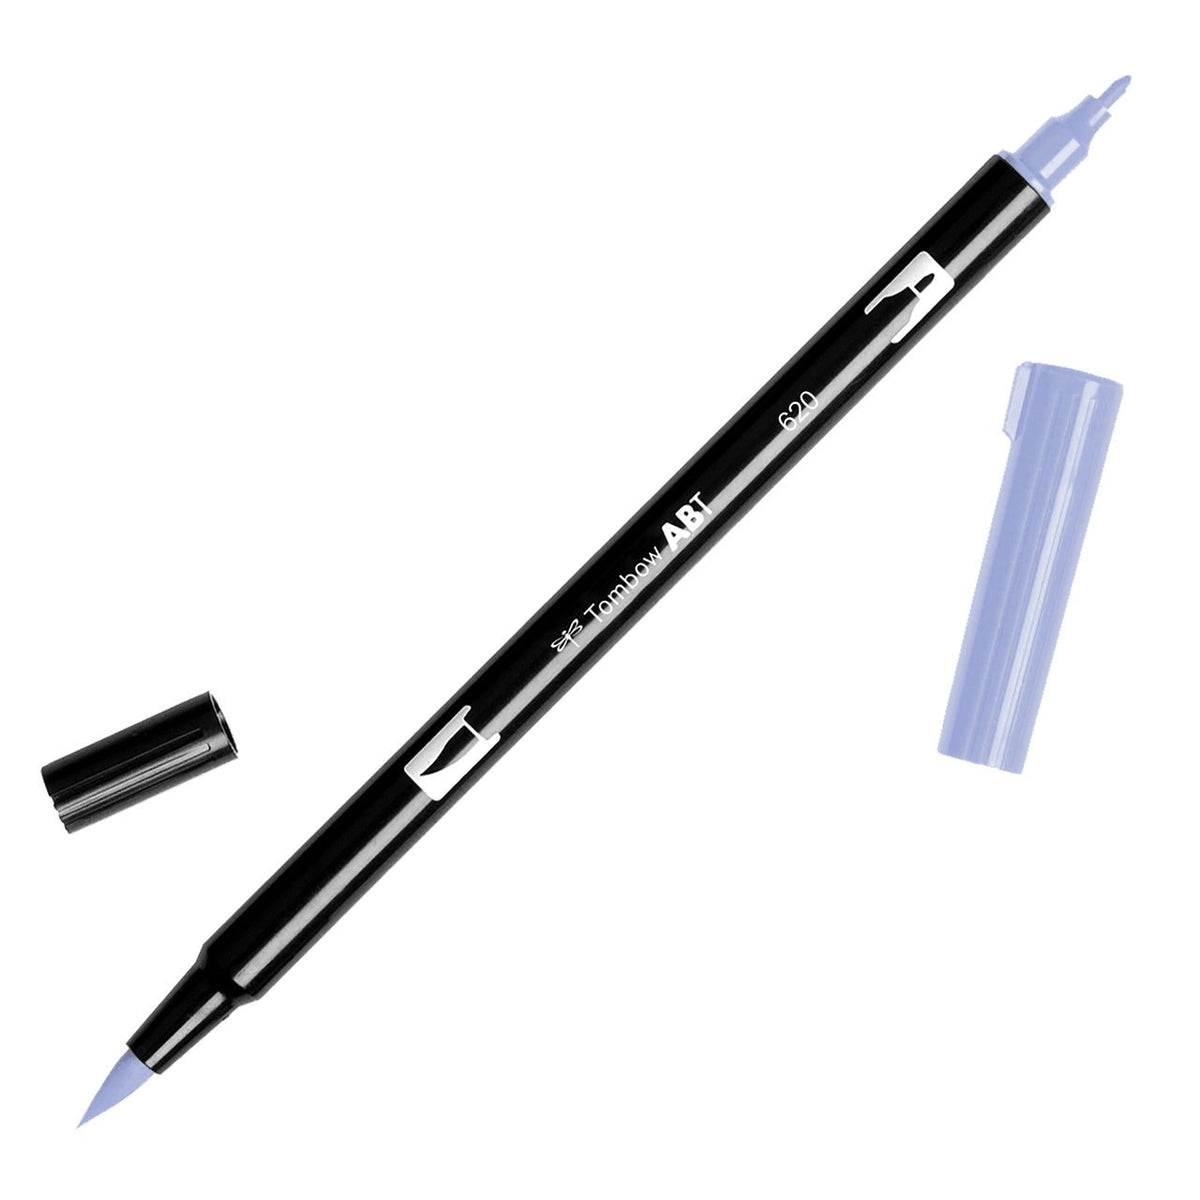 EMOTT Fineliner Pen Sets, 40-Pen Set - MICA Store